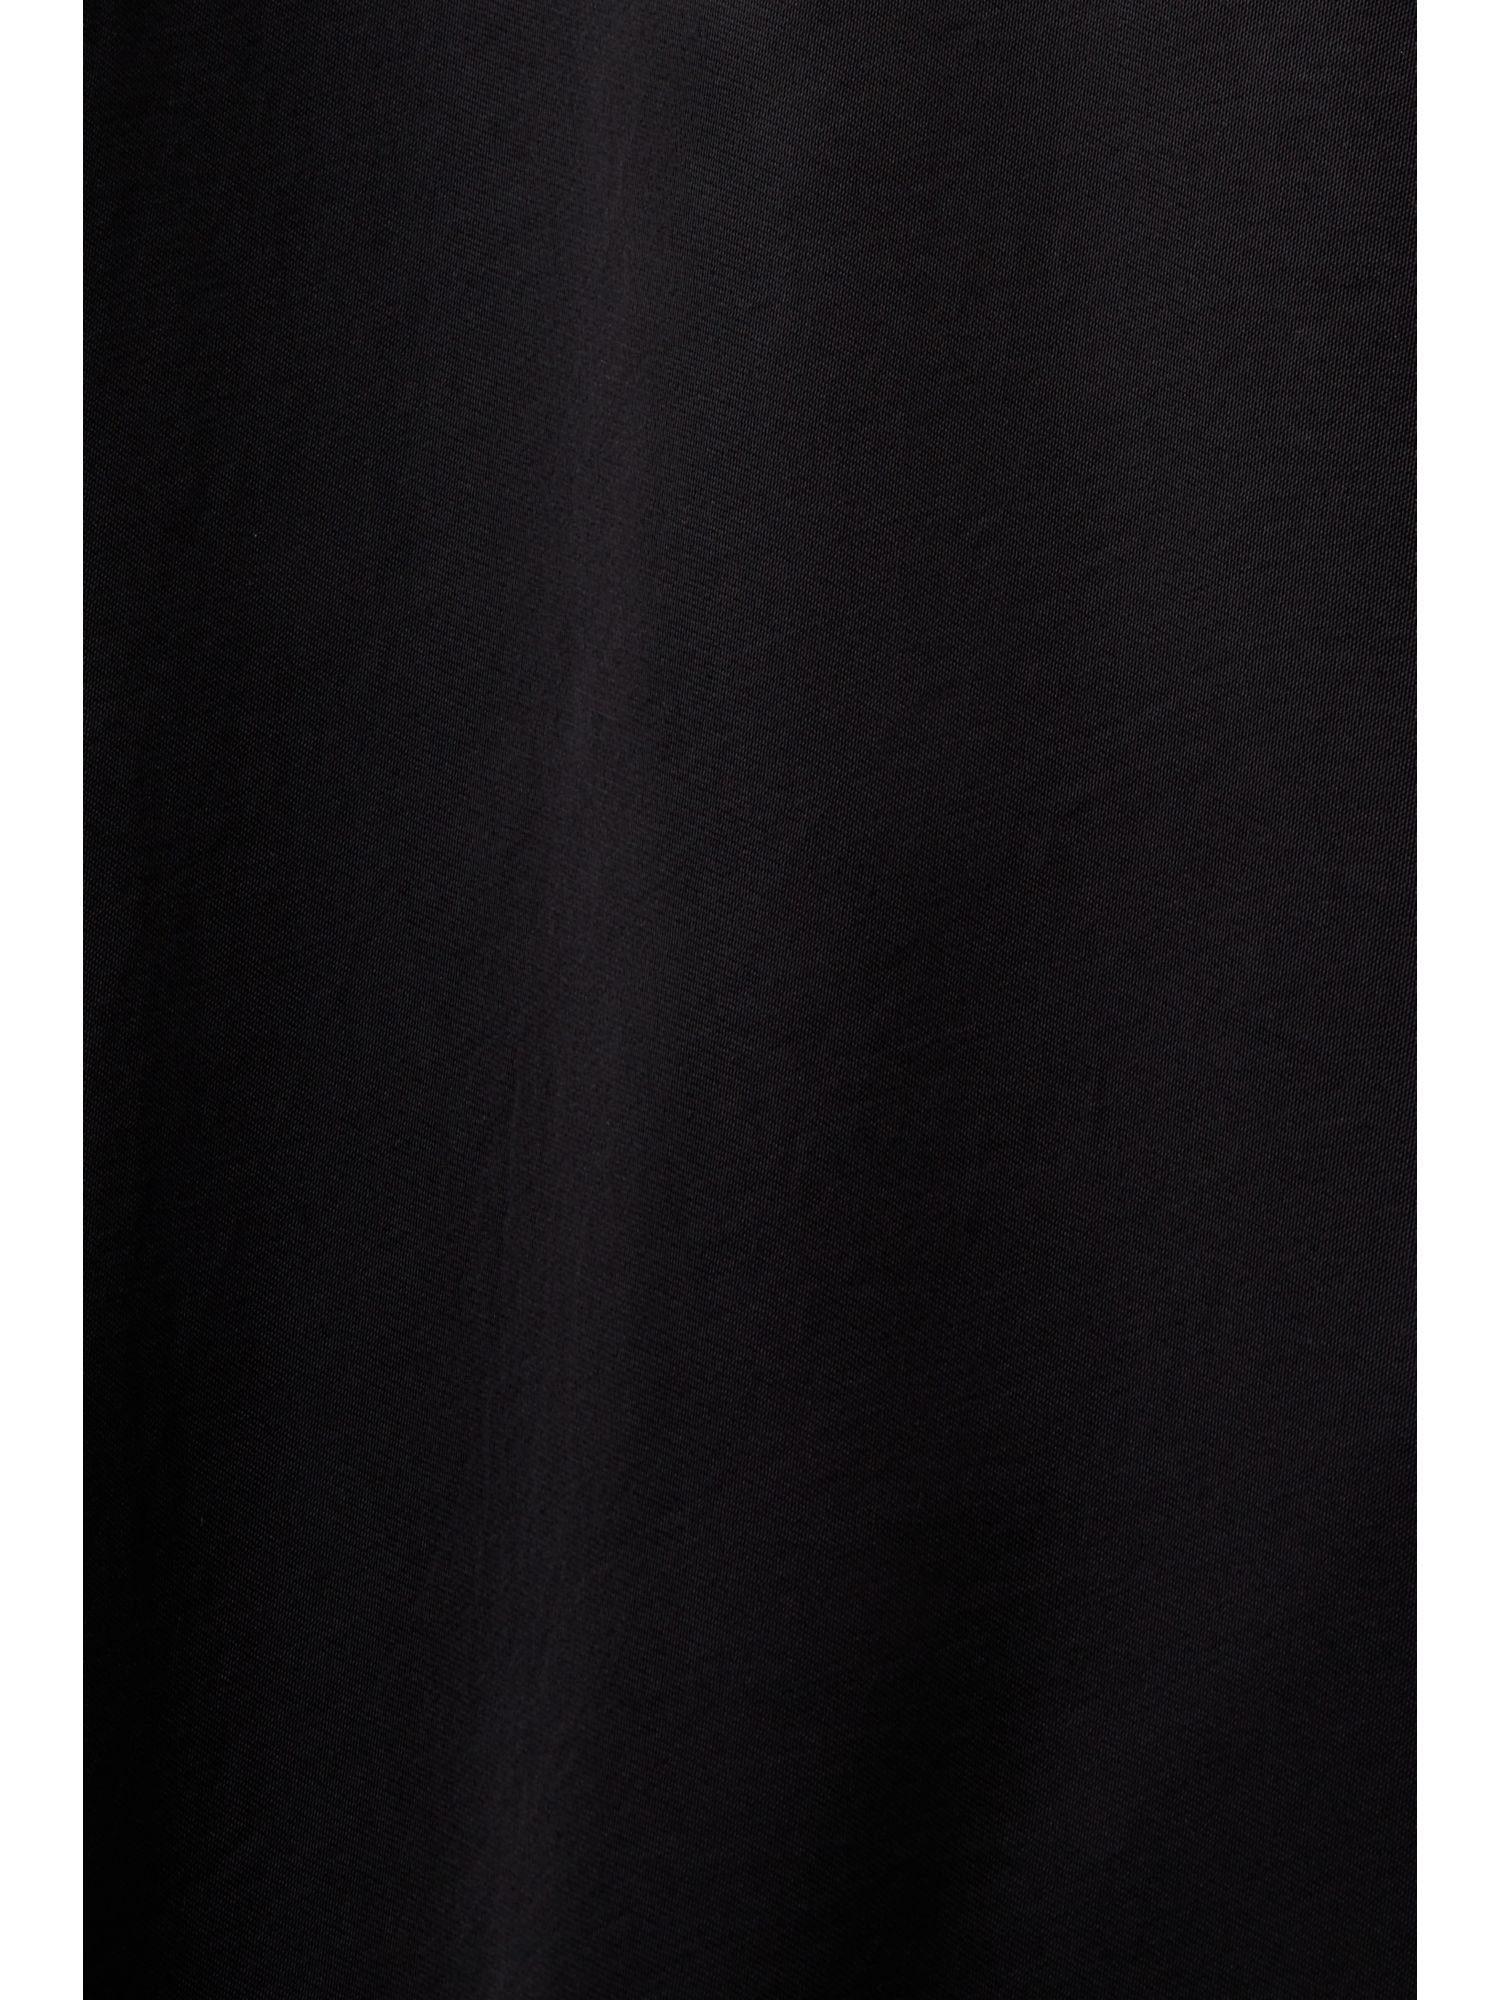 Nachthemd mit LENZING™ Spitze, ECOVERO™ Esprit Satin-Nachthemd